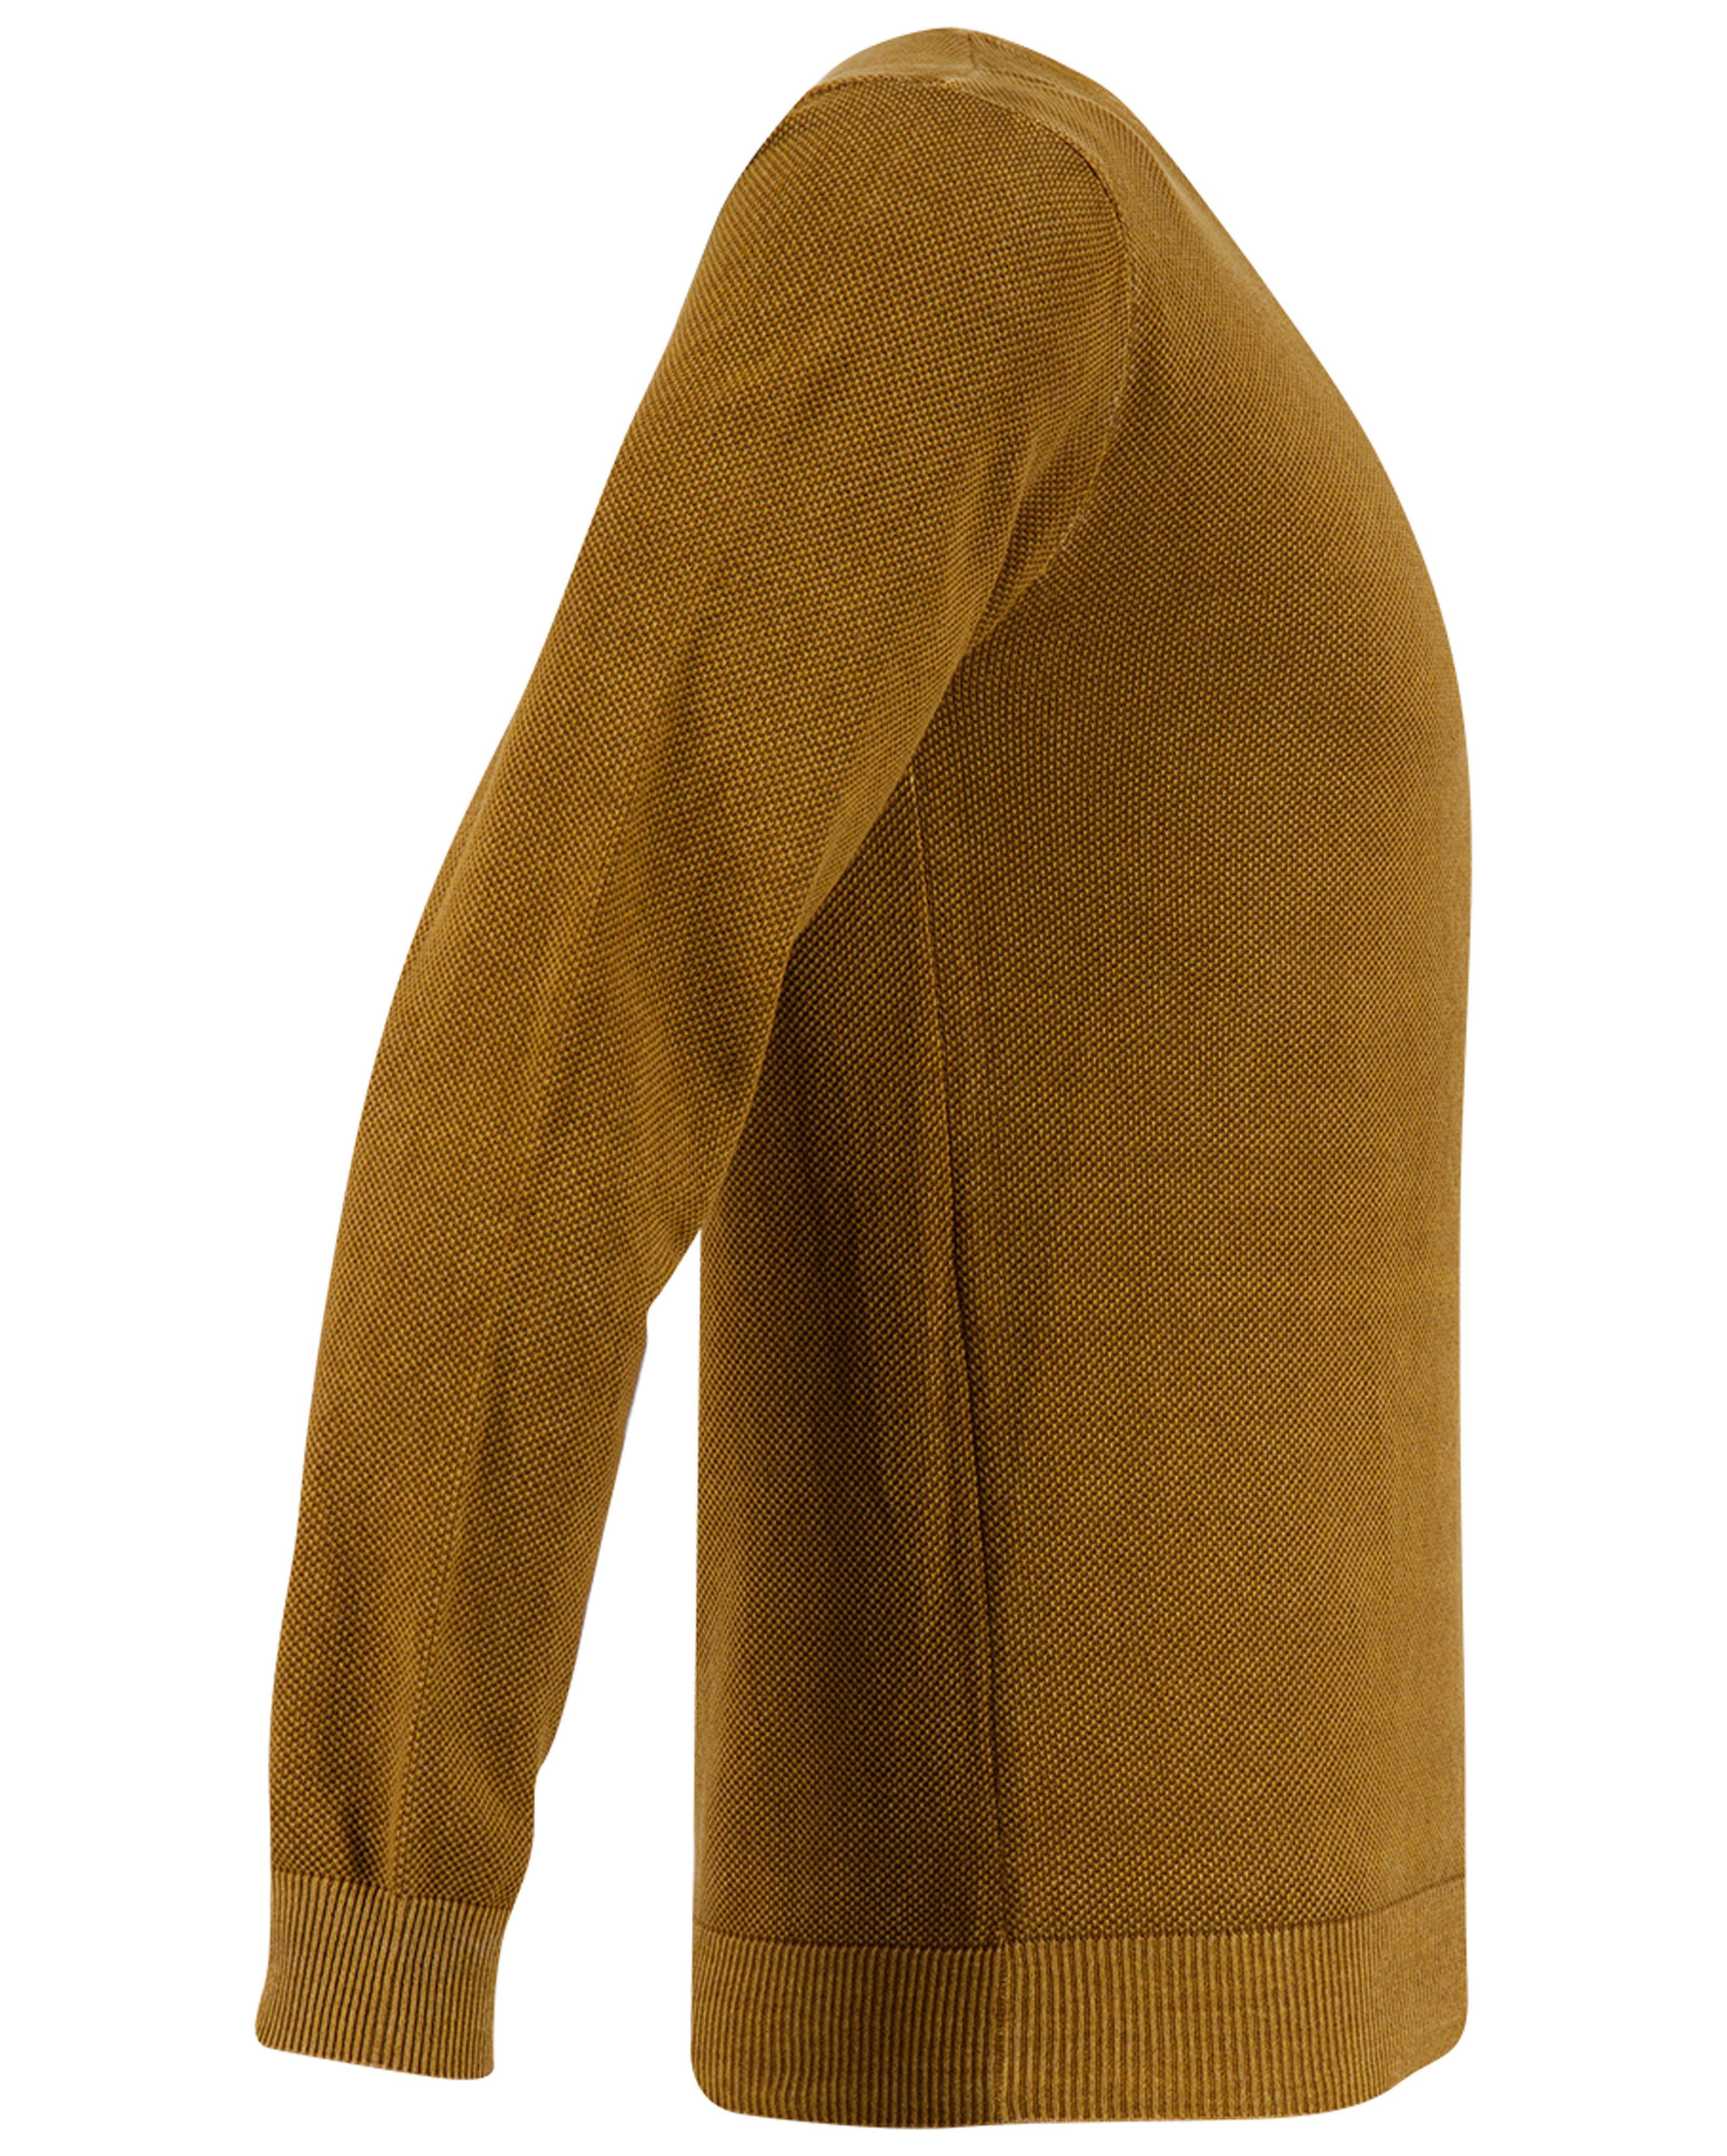  KS-QON BENG Ancient Tarot Cards Men's Sweatshirts Crewneck  Pullover Casual Sweater Style : Clothing, Shoes & Jewelry